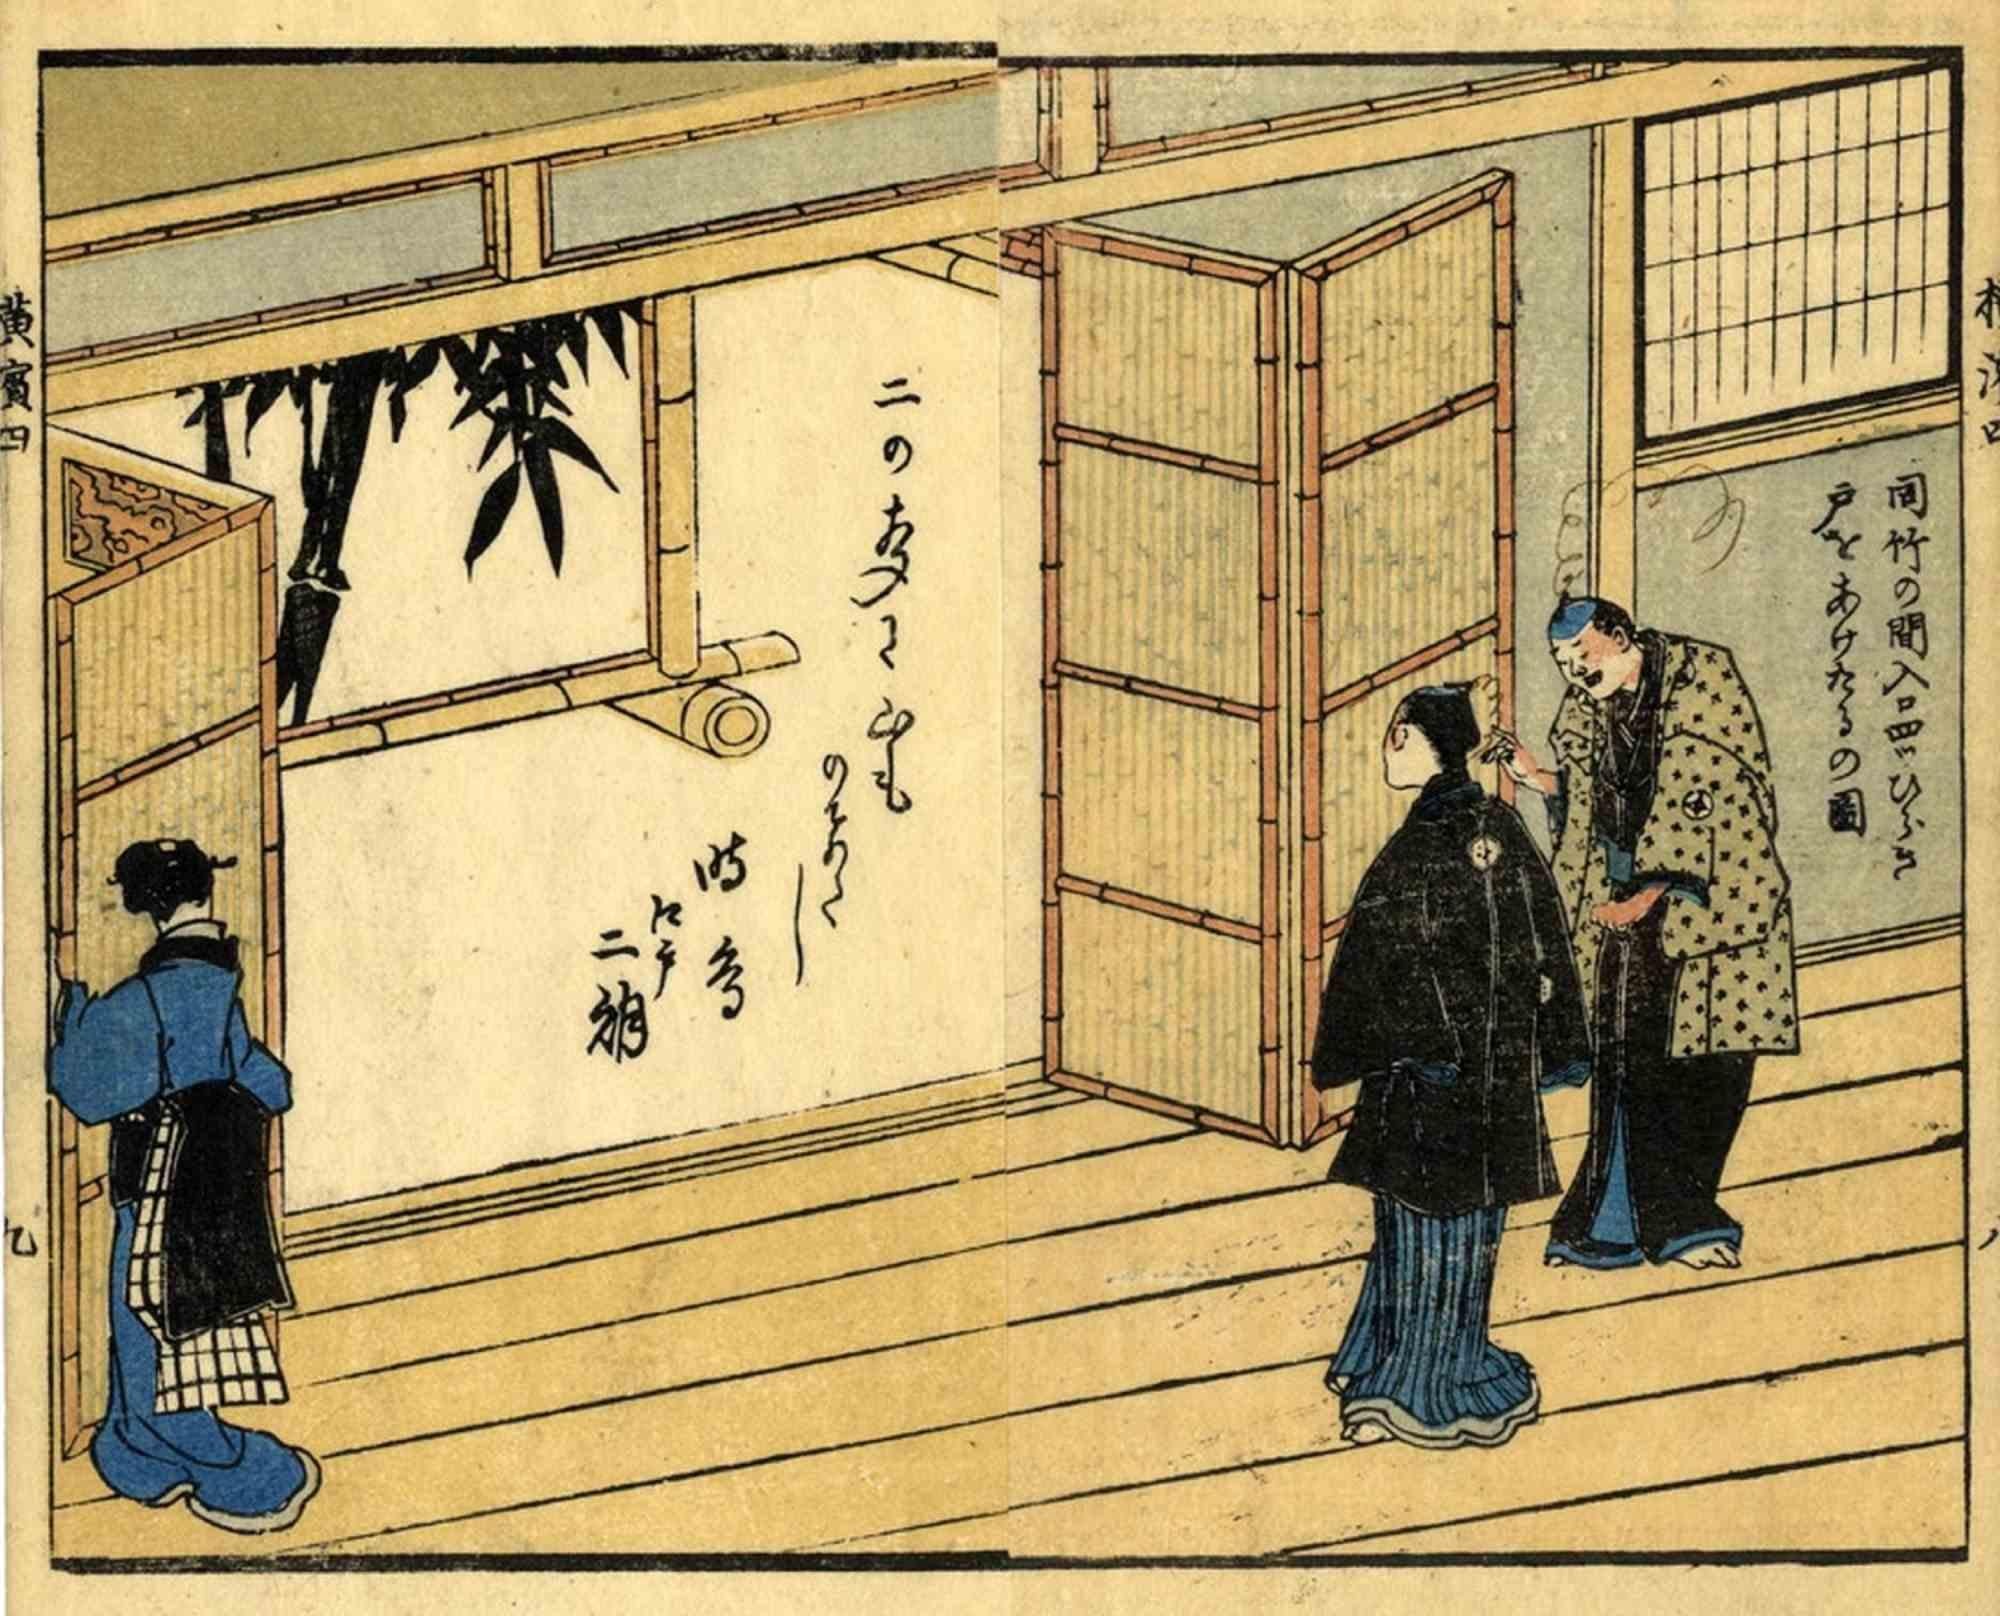 Bamboo Rooms in Iwahisa - Woodcut by Utagawa Hiroshige II - 1840s